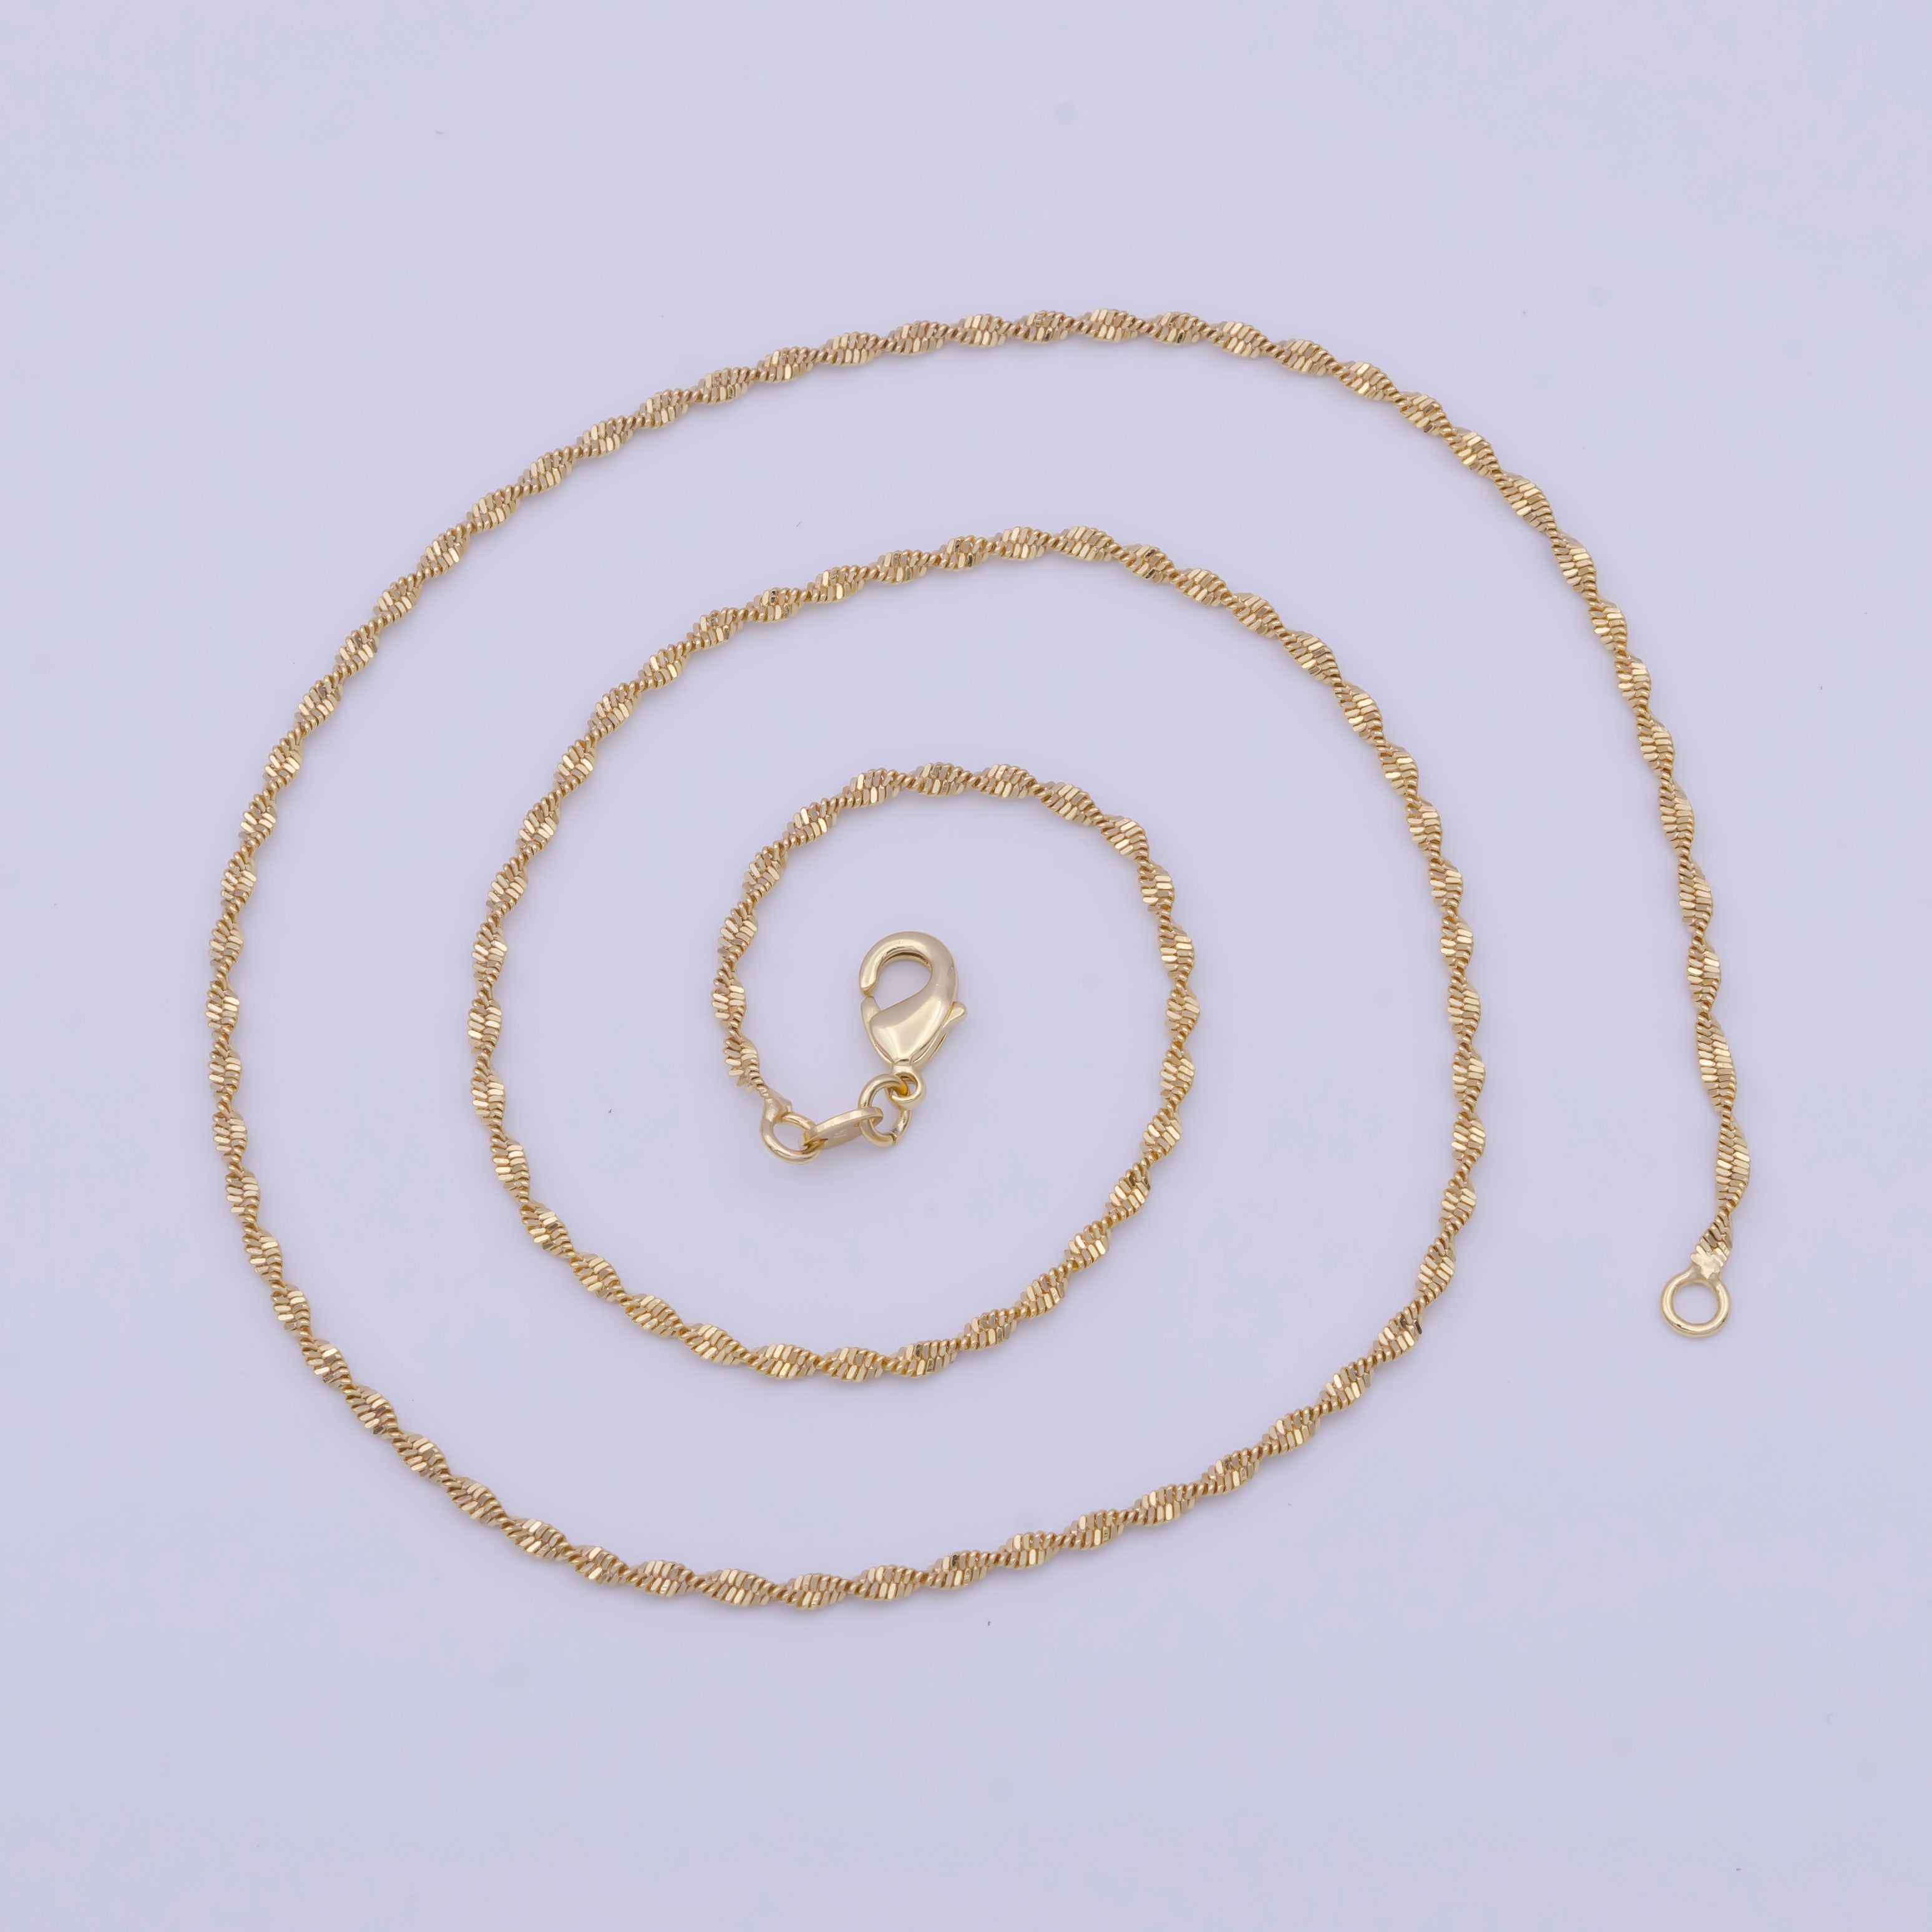 Dainty Gold Chain Necklace, Twist Chain Necklace Ready To Wear for Jewelry Making WA-1118 - DLUXCA